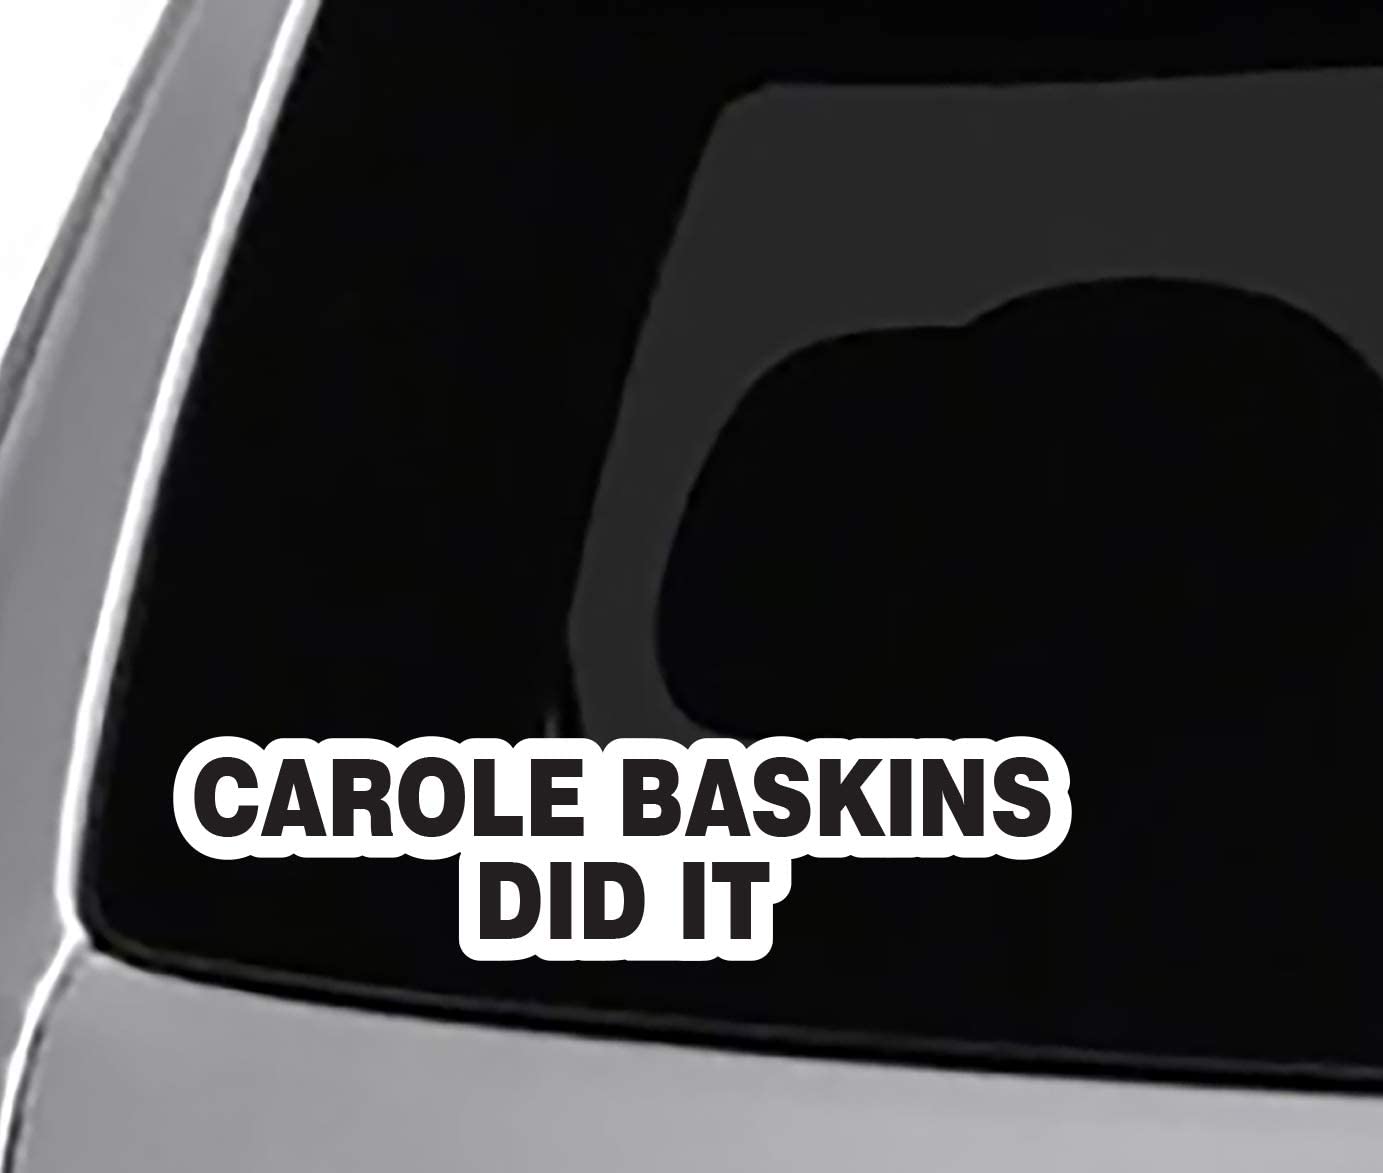 Carole BASKINS DID IT Decal CAR Truck Window Laptop Toolbox Sticker Funny Joke 2020 TIGERKING